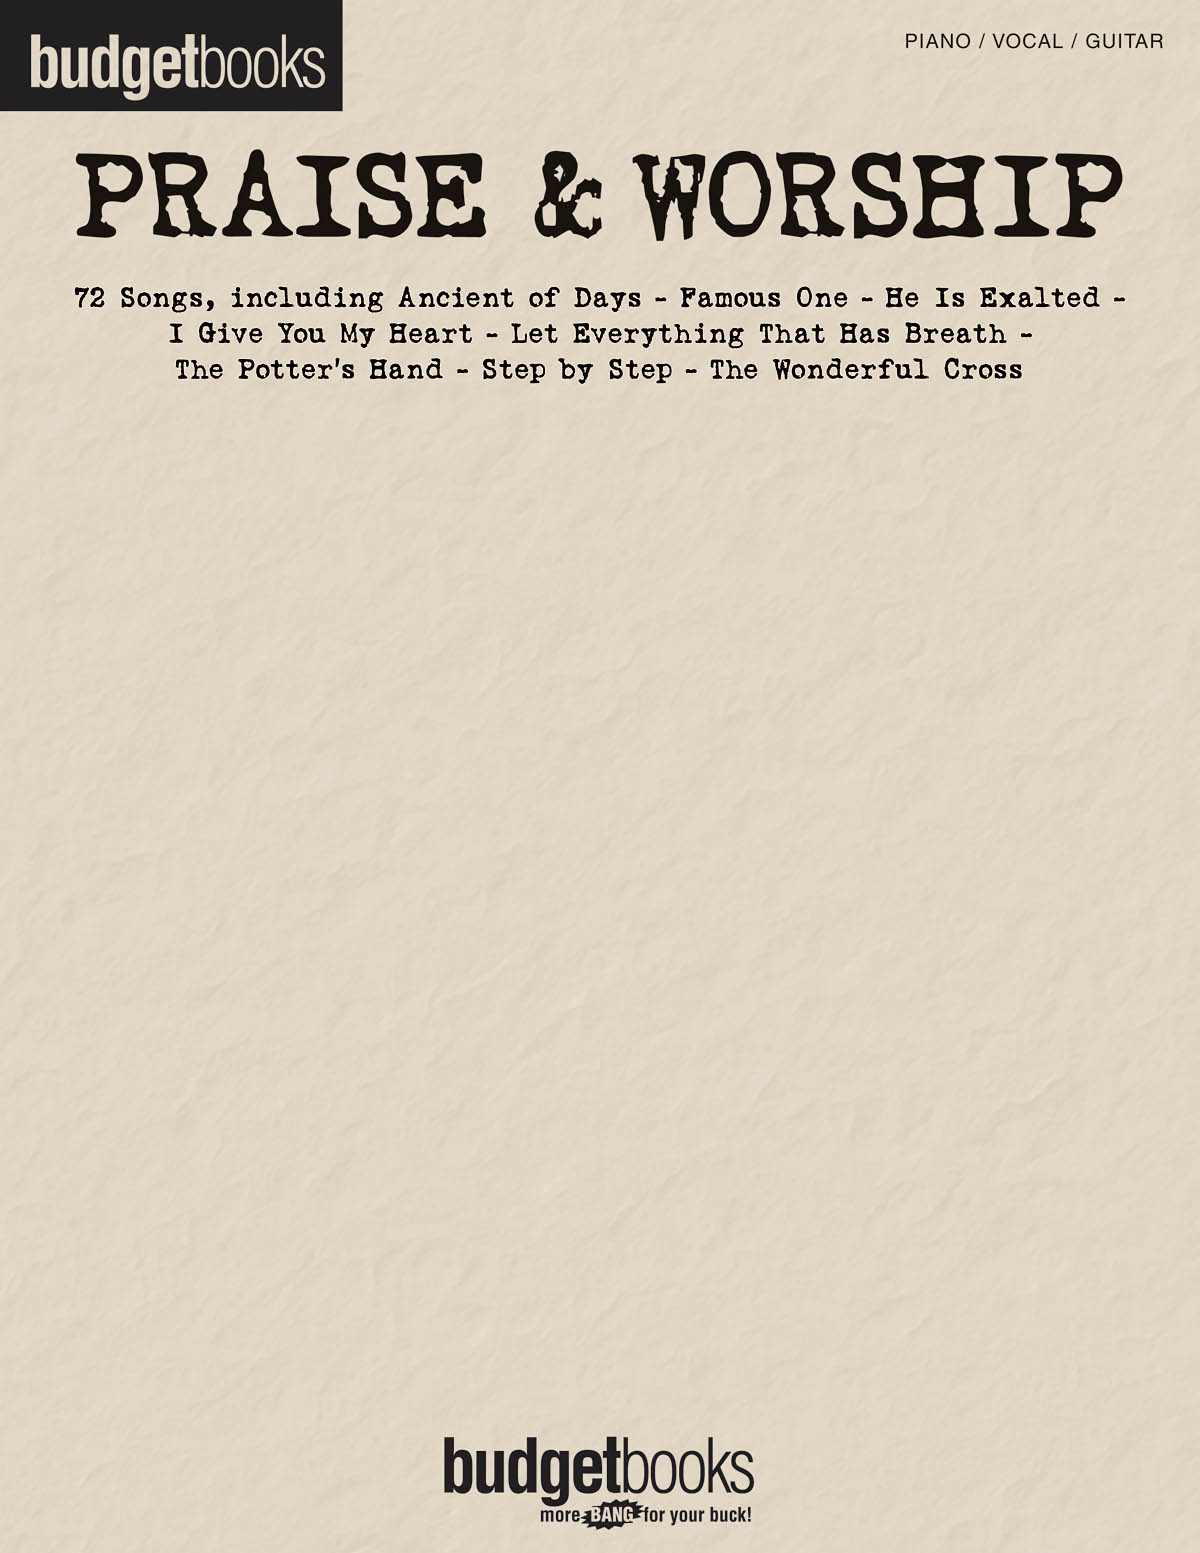 Budgetbooks: Praise & Worship